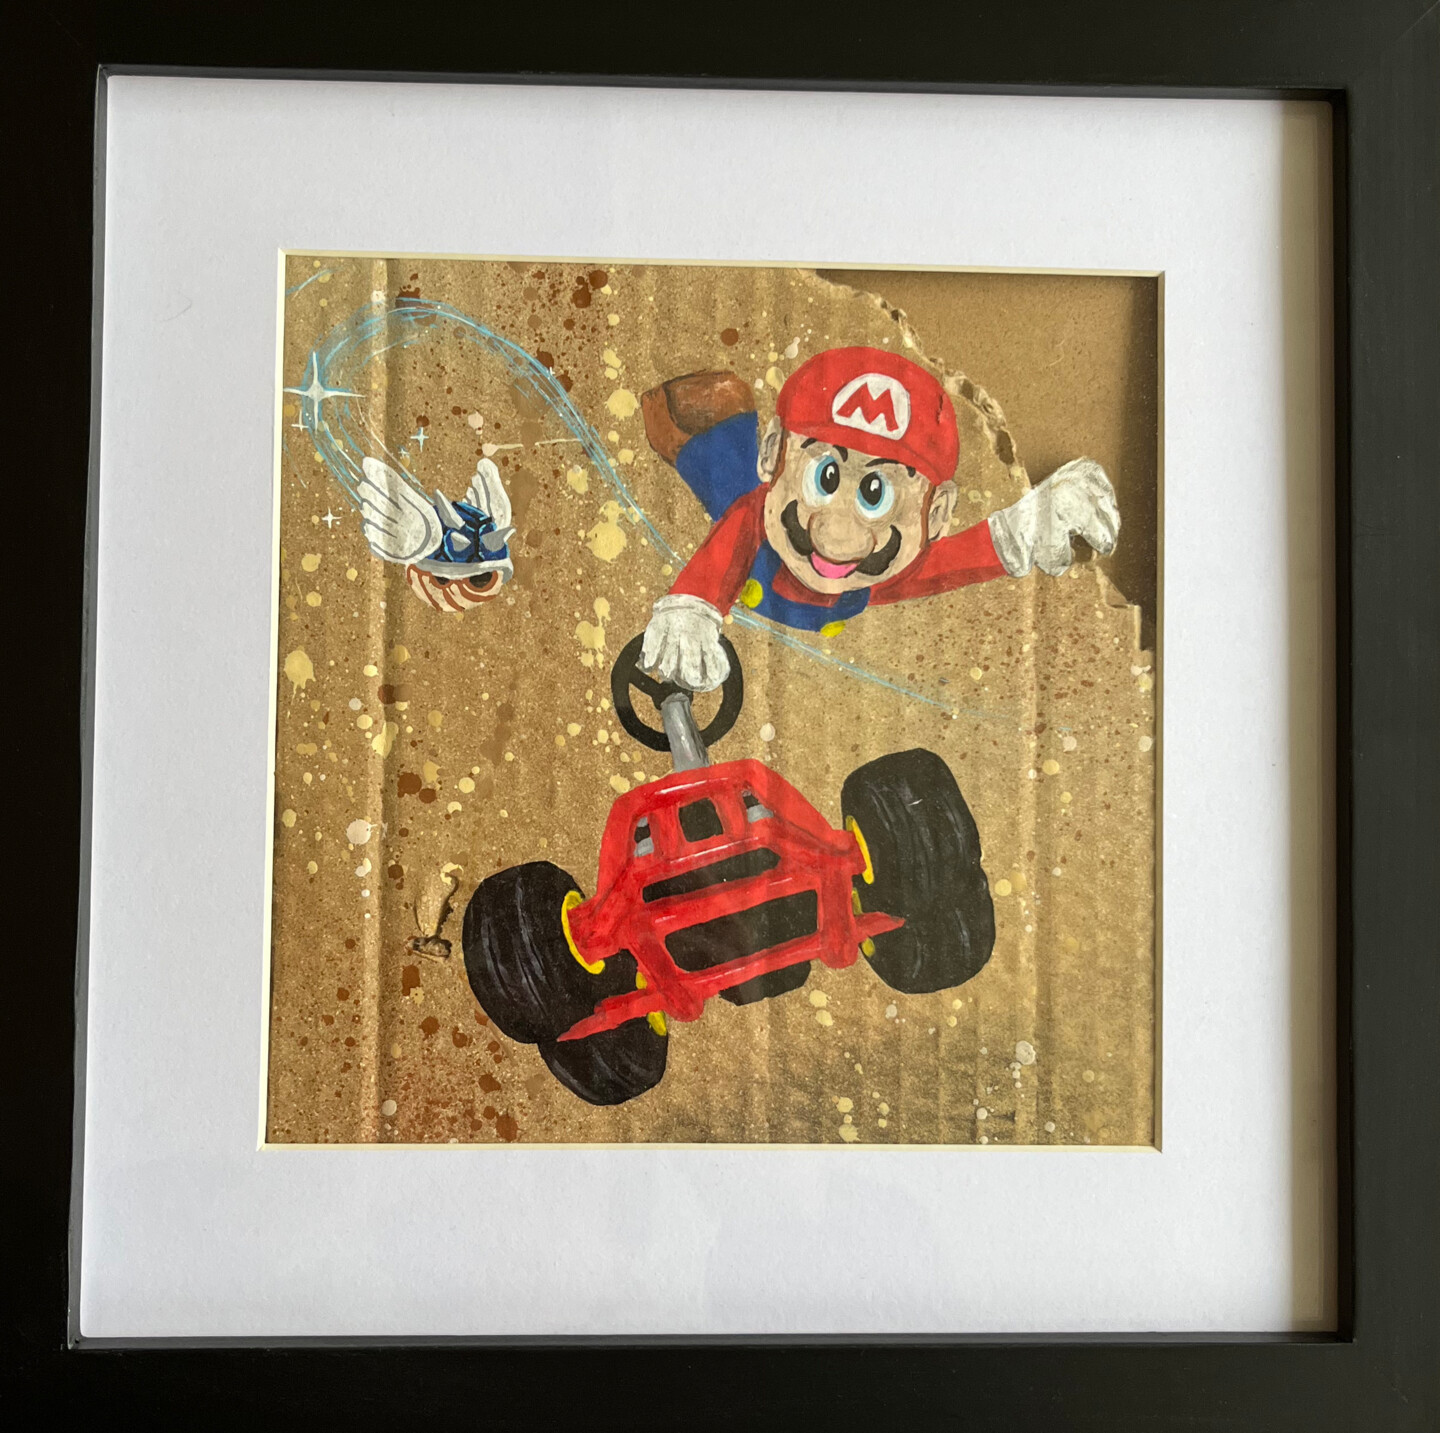 Mario Kart, Painting by Comains | Artmajeur